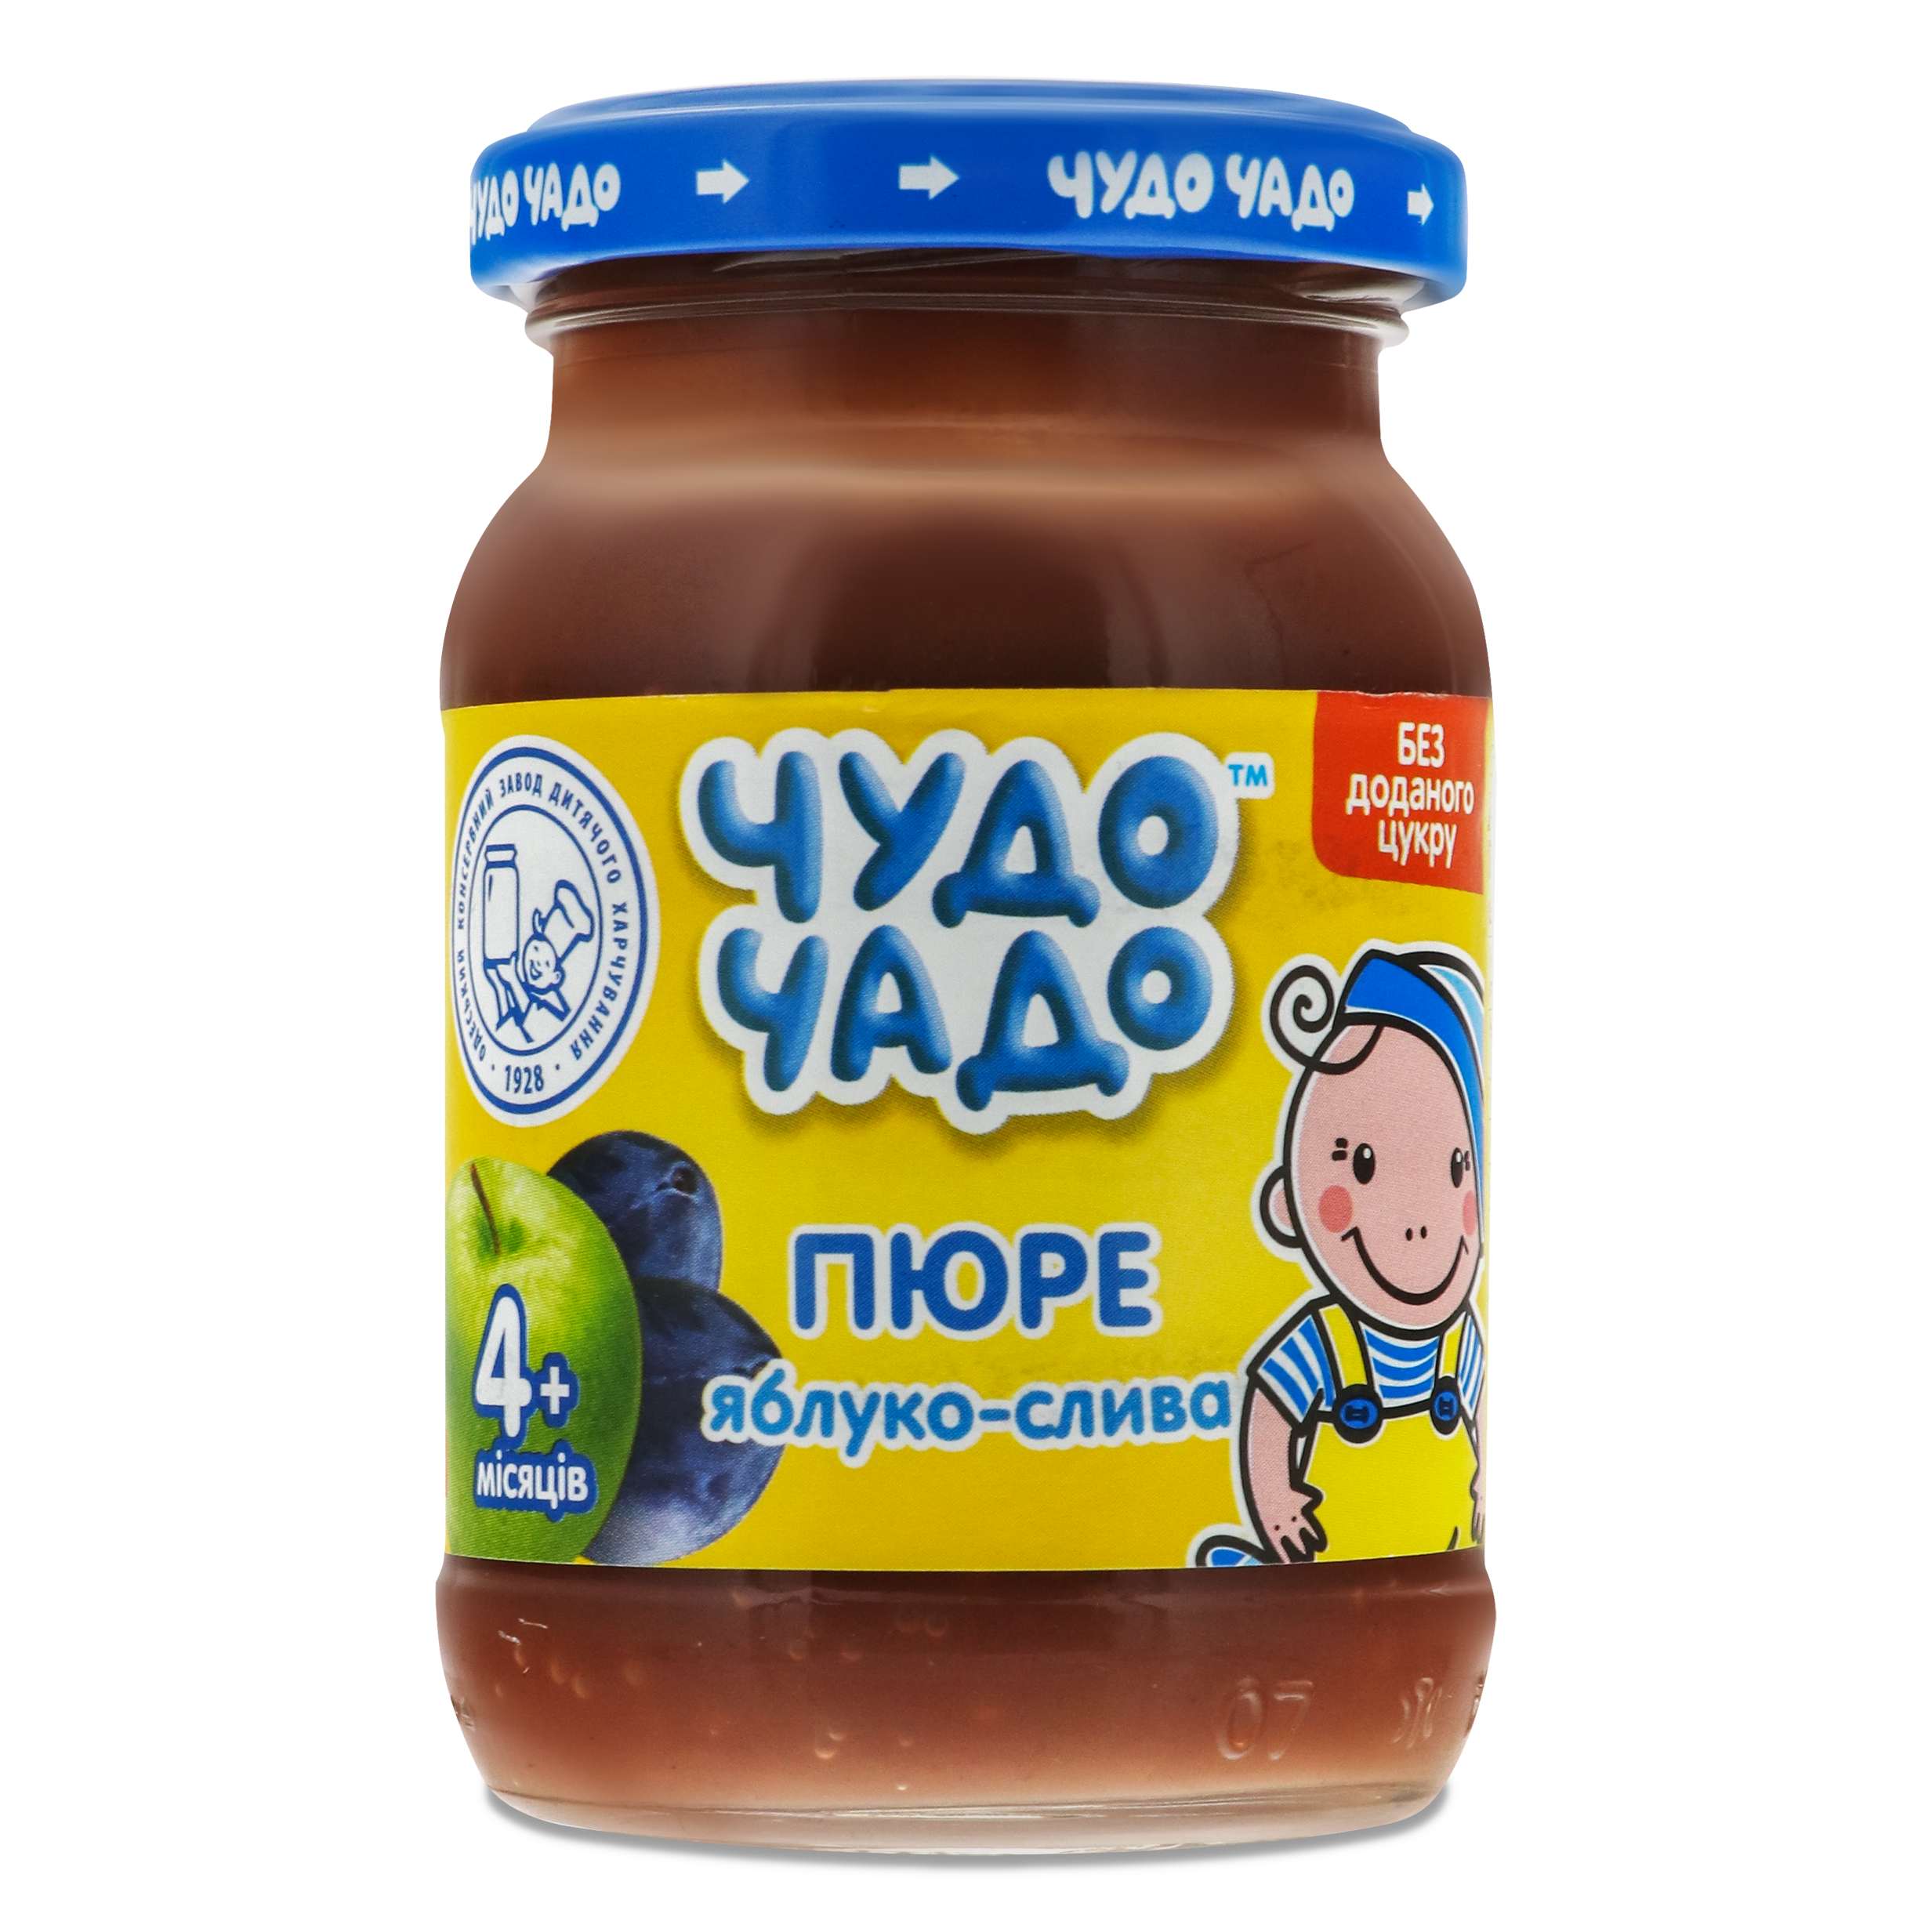 Chudo Chado apple plum puree for children from 4 months 170g